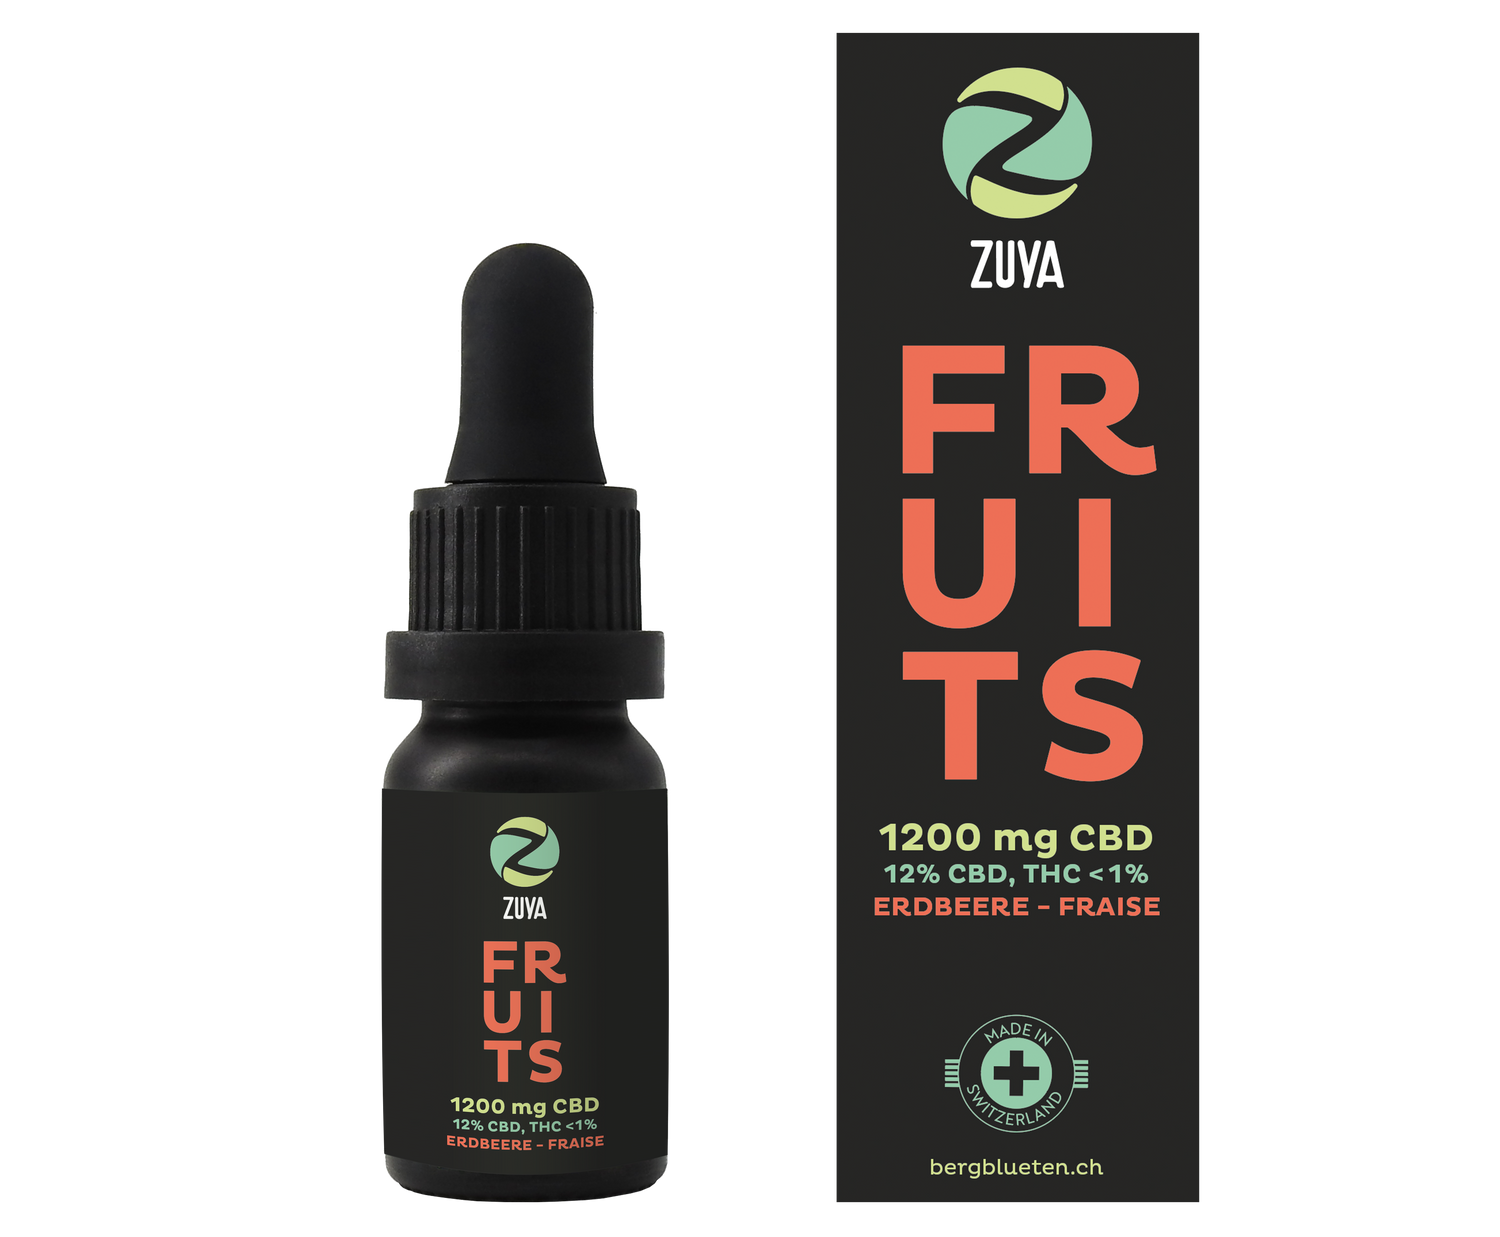 Zuya Fruits 12% CBD fragrance oil